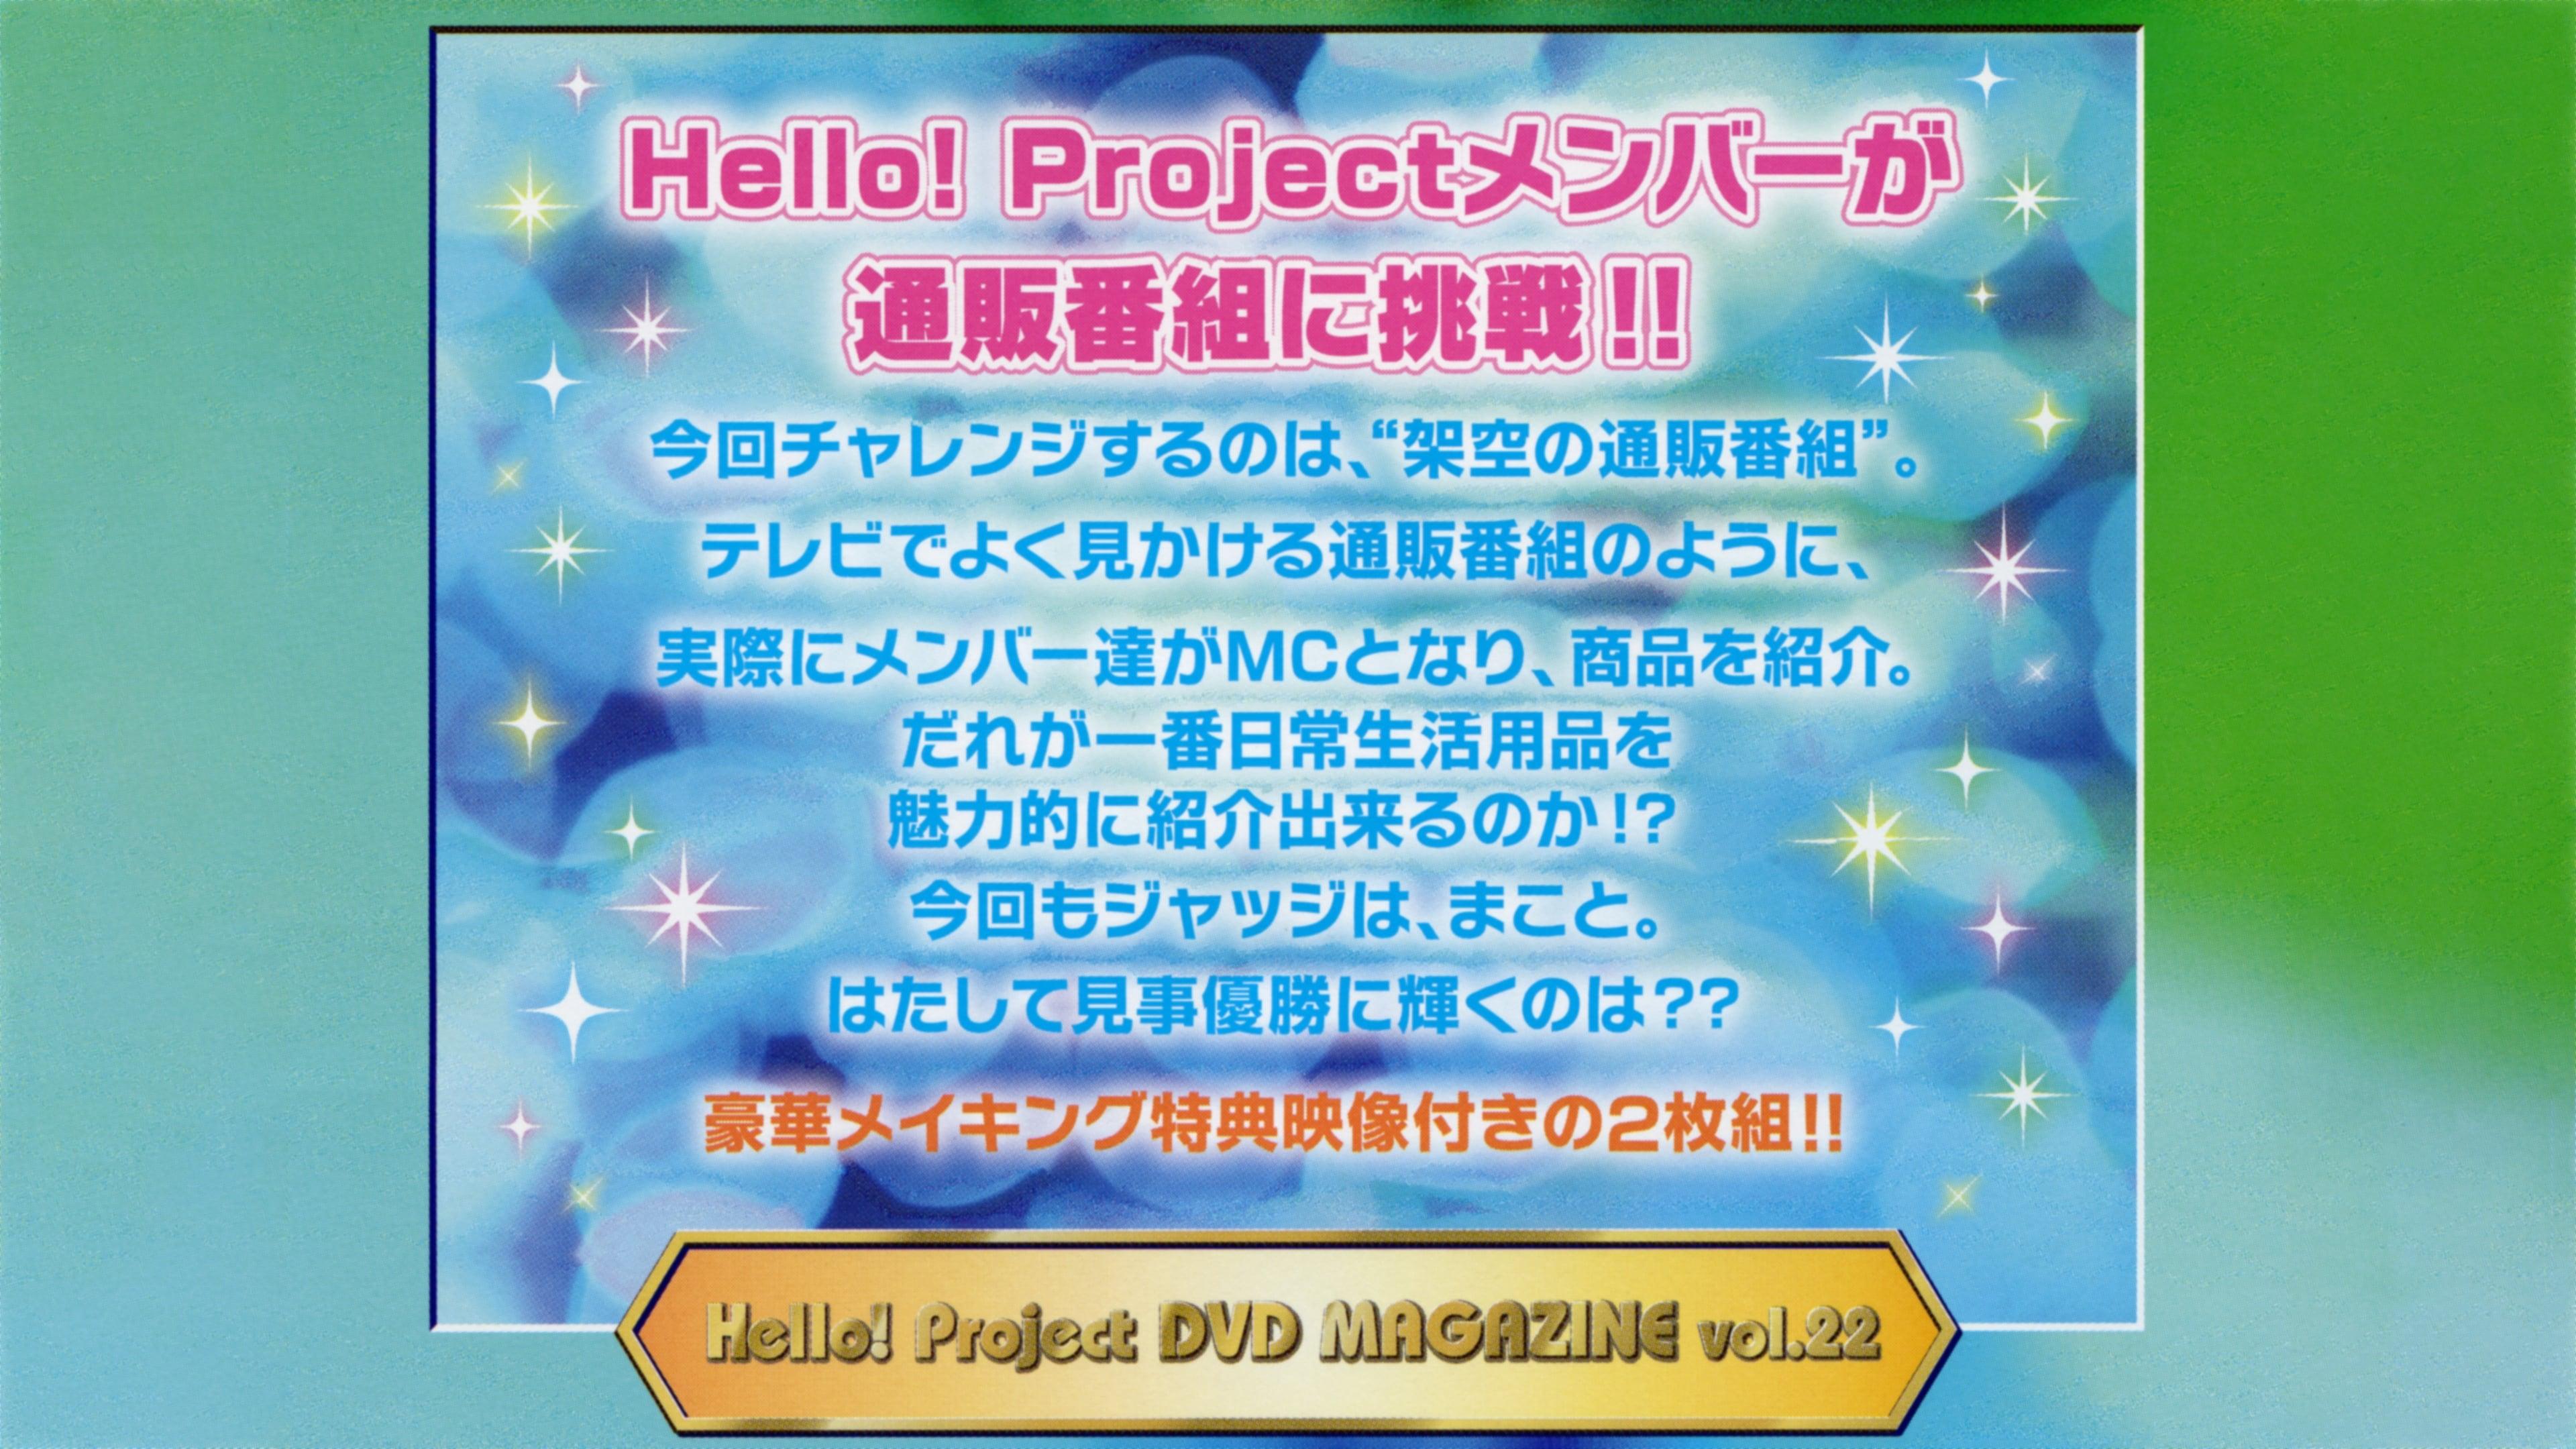 Hello! Project DVD Magazine Vol.22 backdrop